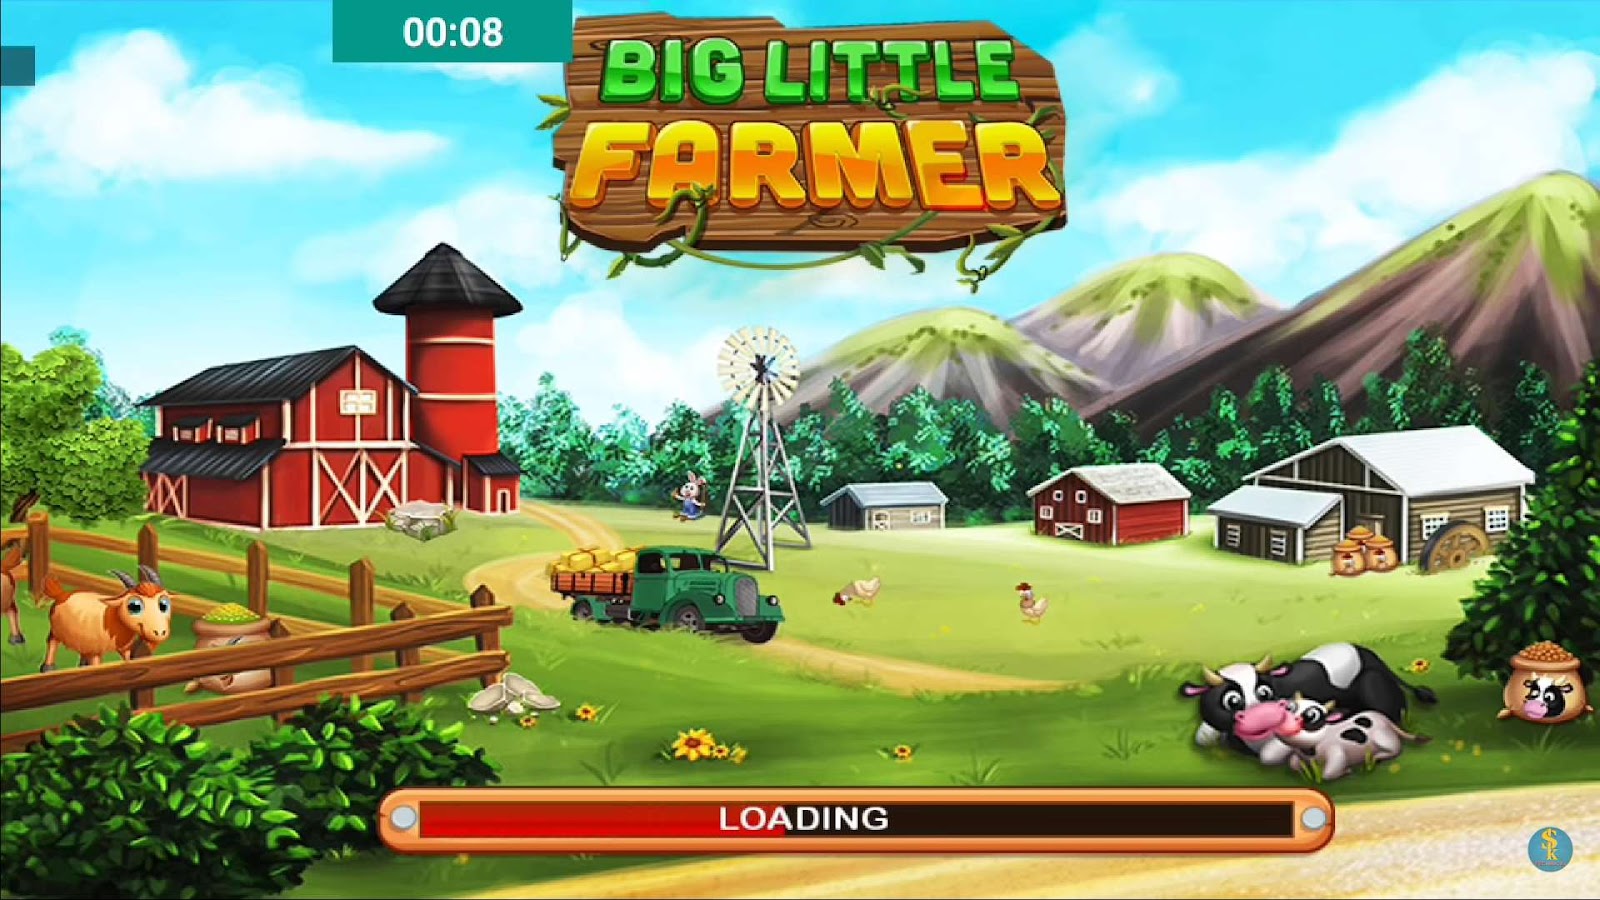 Big Little Farmer game interface